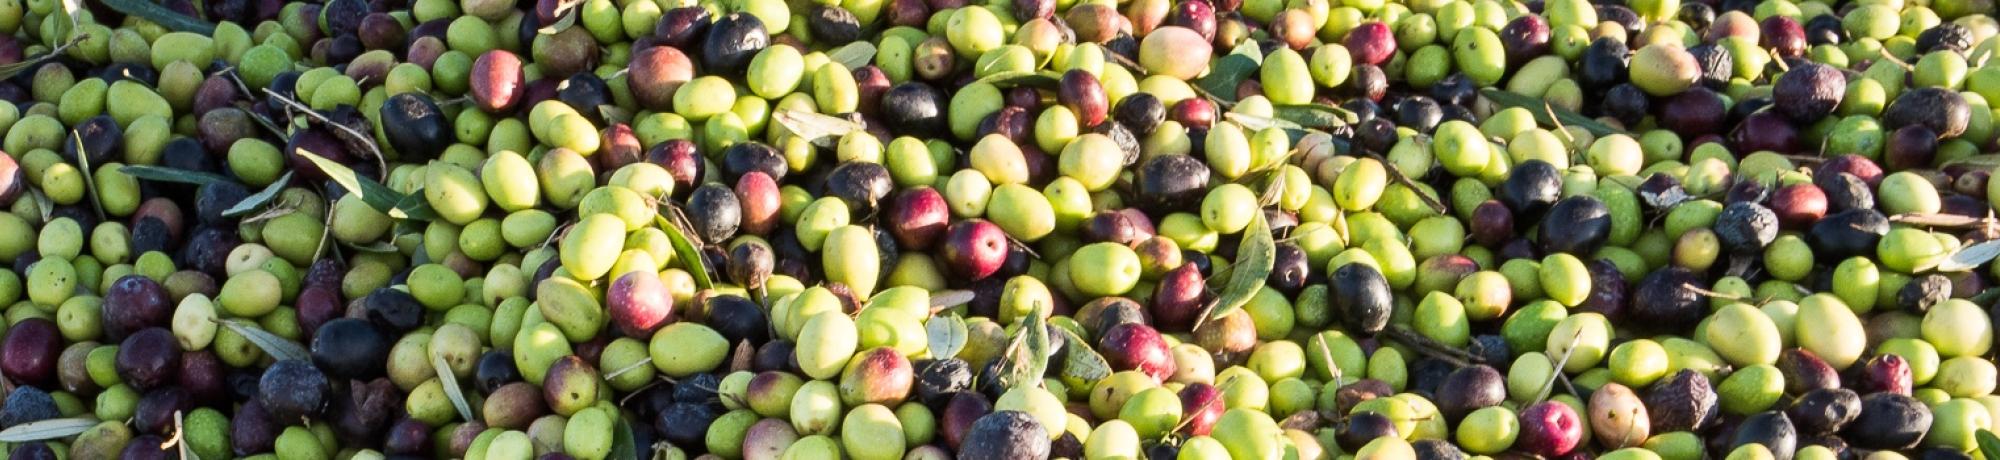 olives in a bin